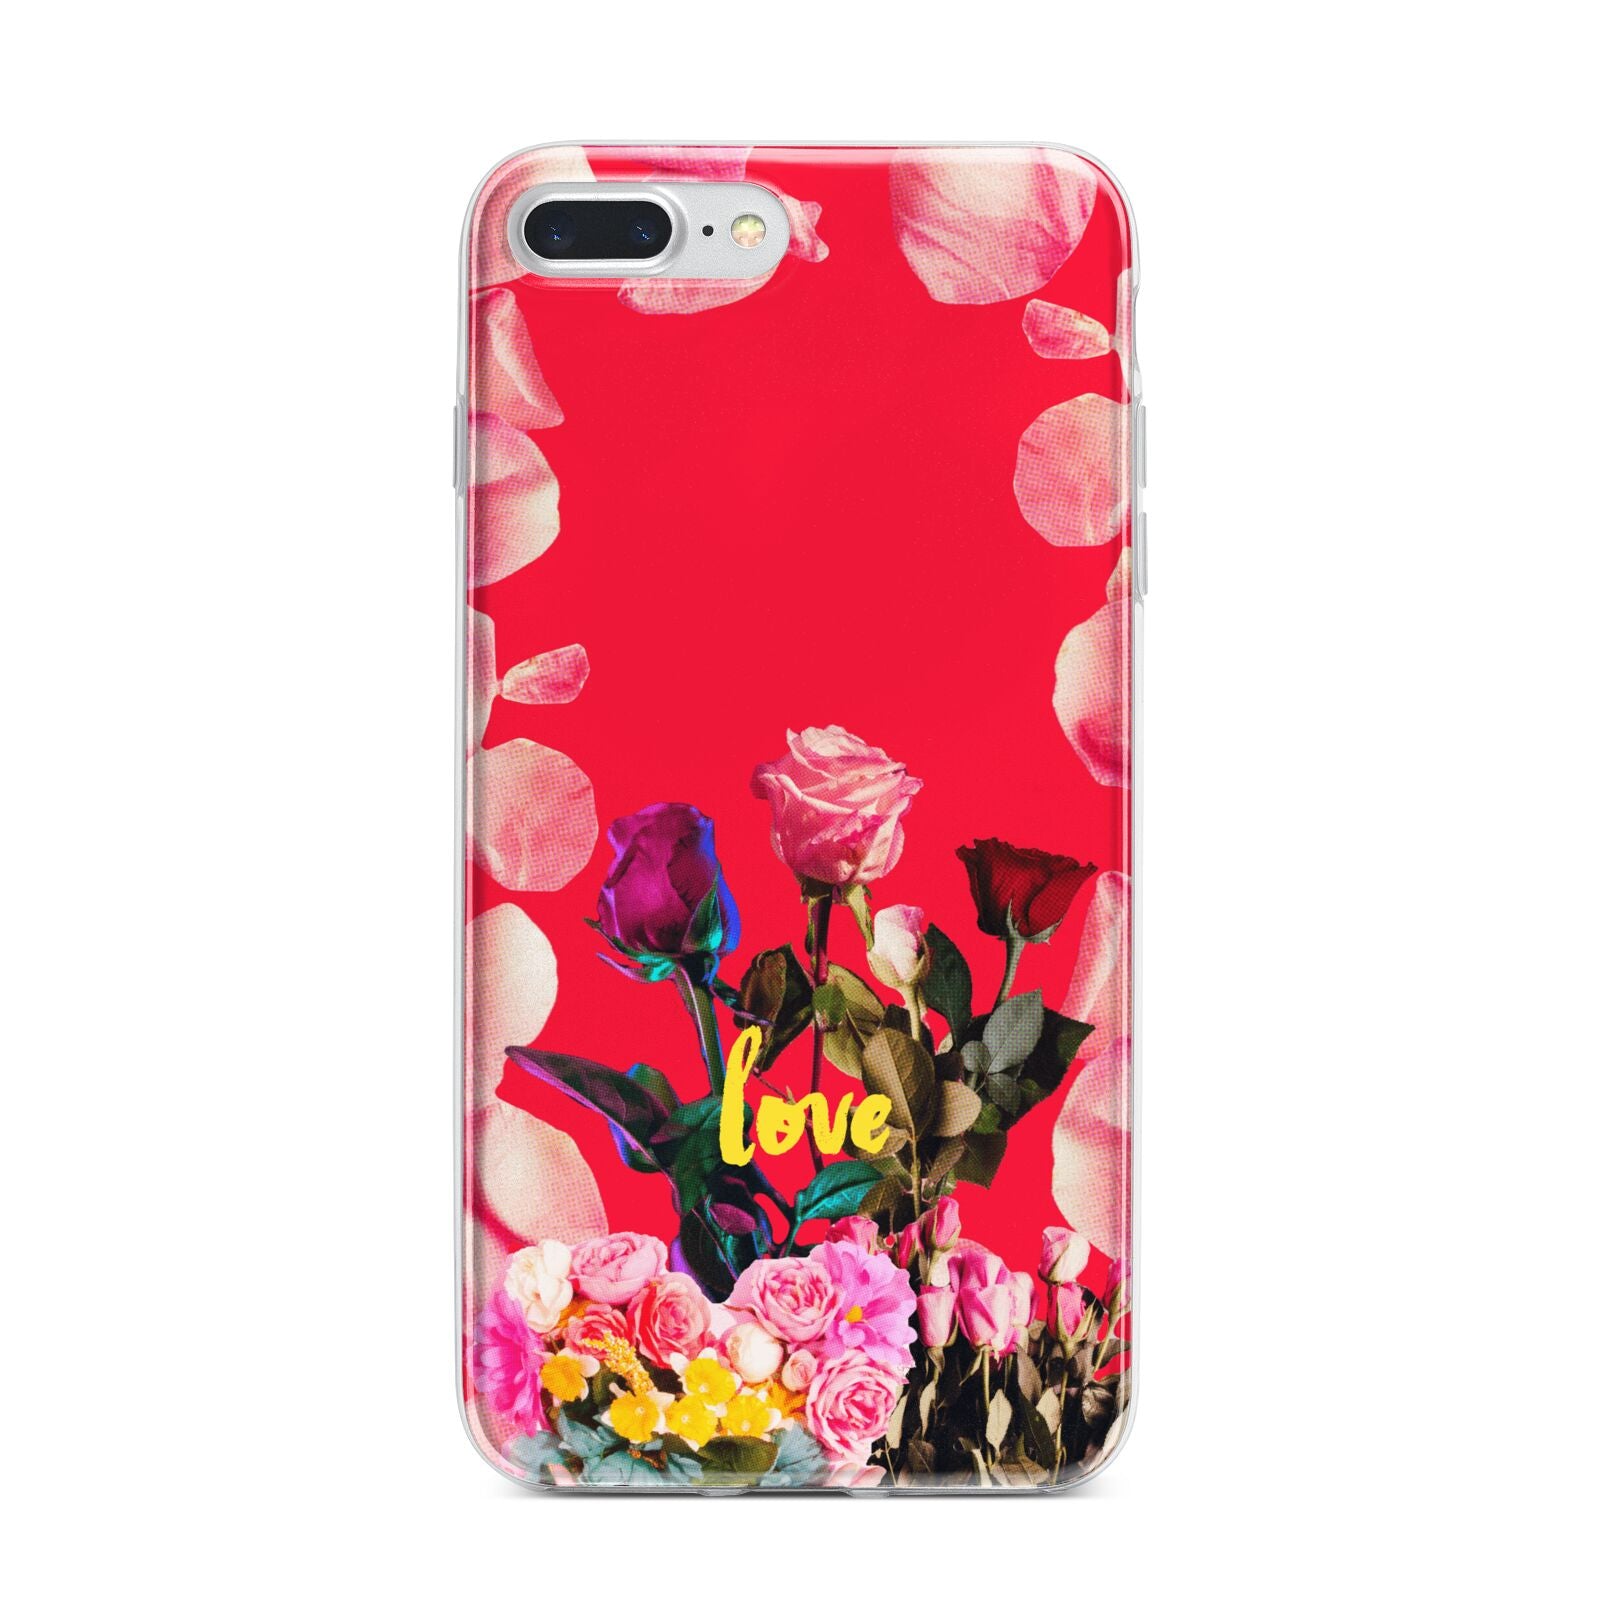 Retro Floral Valentine iPhone 7 Plus Bumper Case on Silver iPhone